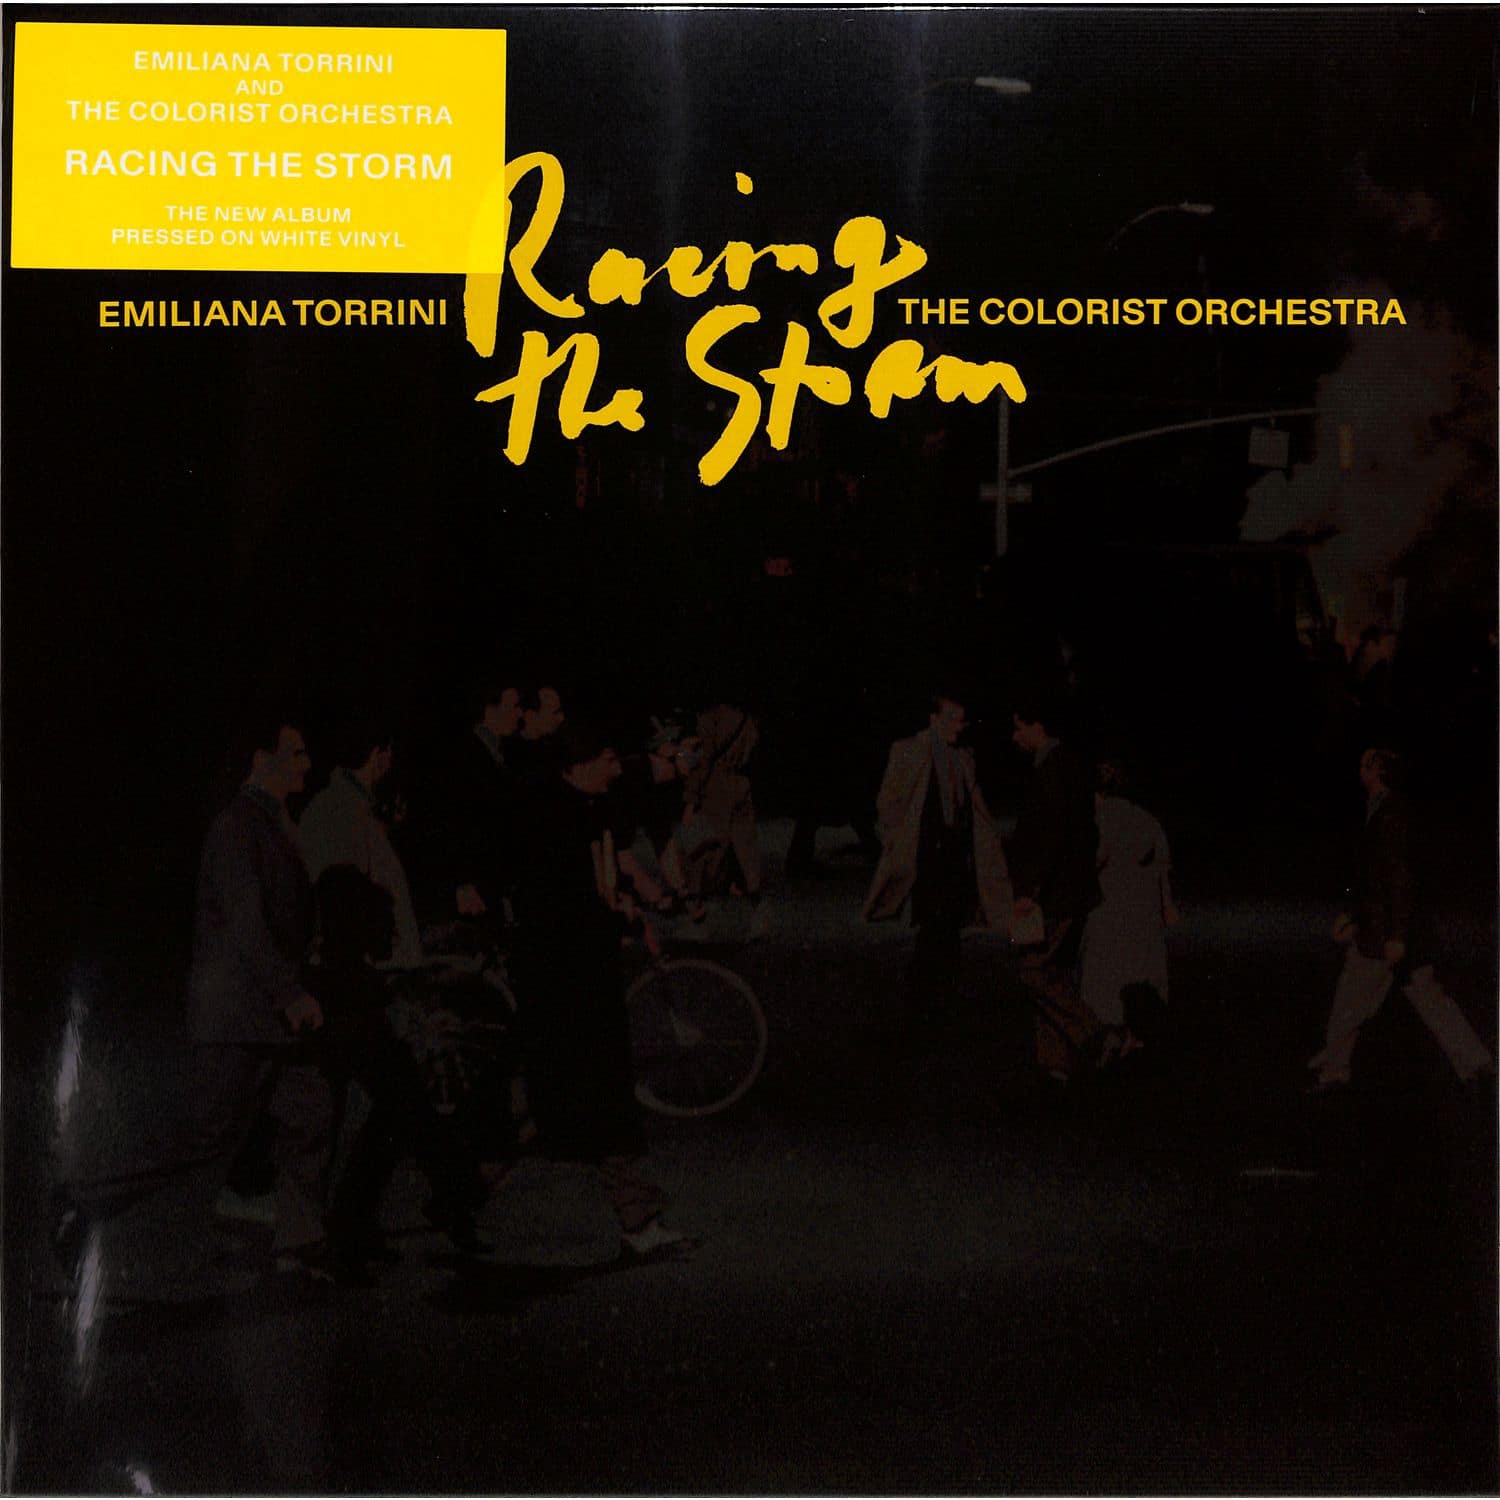 Emiliana Torrini & The Colorist Orchestra - RACING THE STORM 